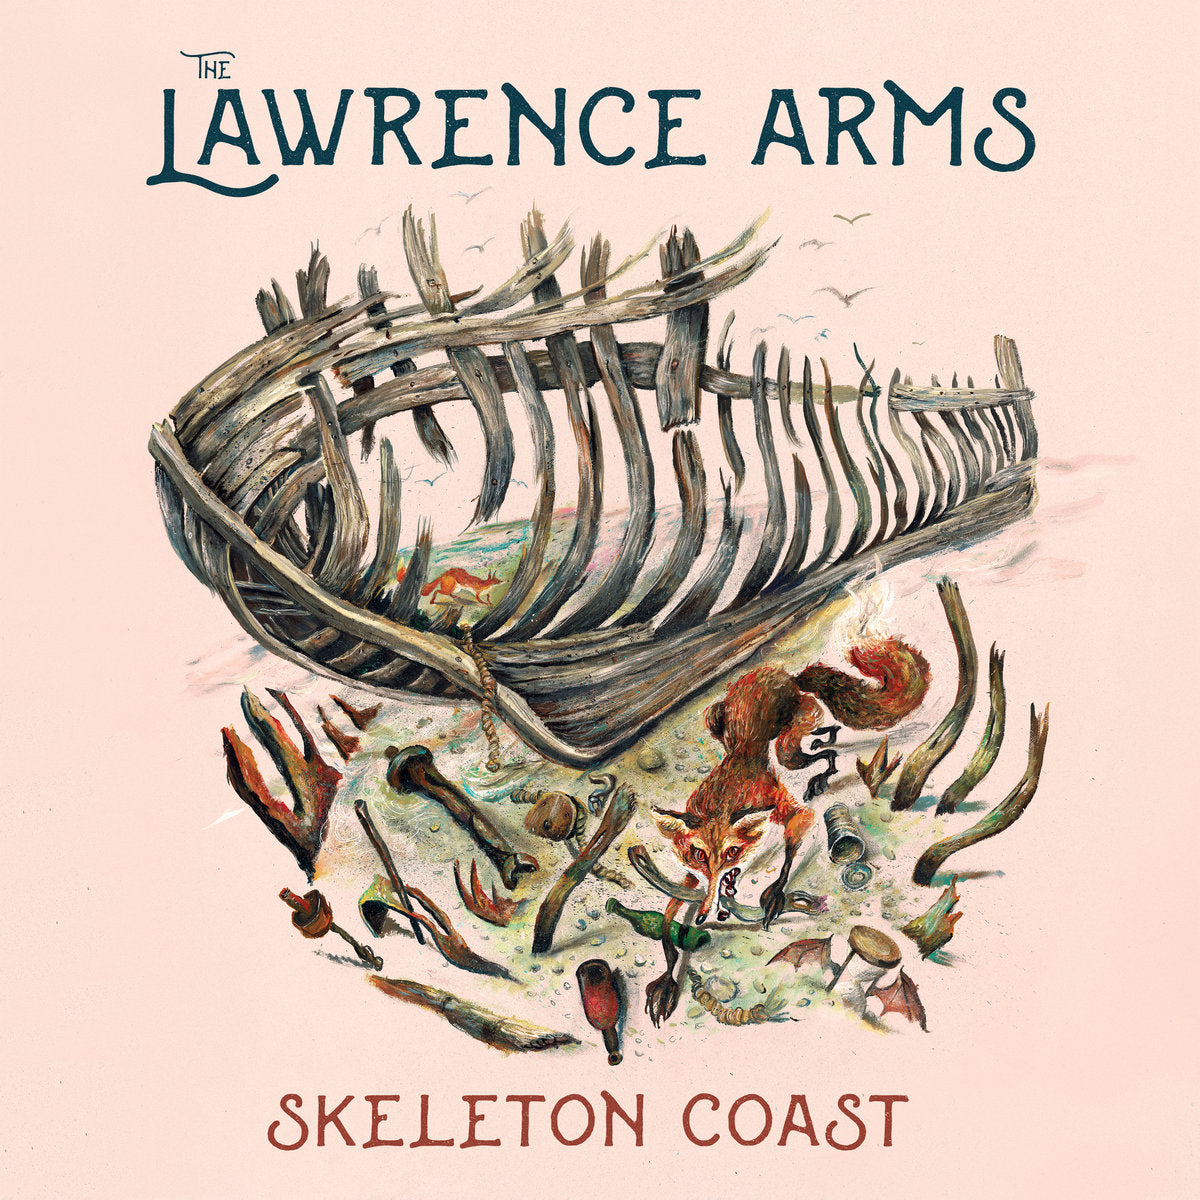 THE LAWRENCE ARMS - Skeleton Coast - LP - Vinyl